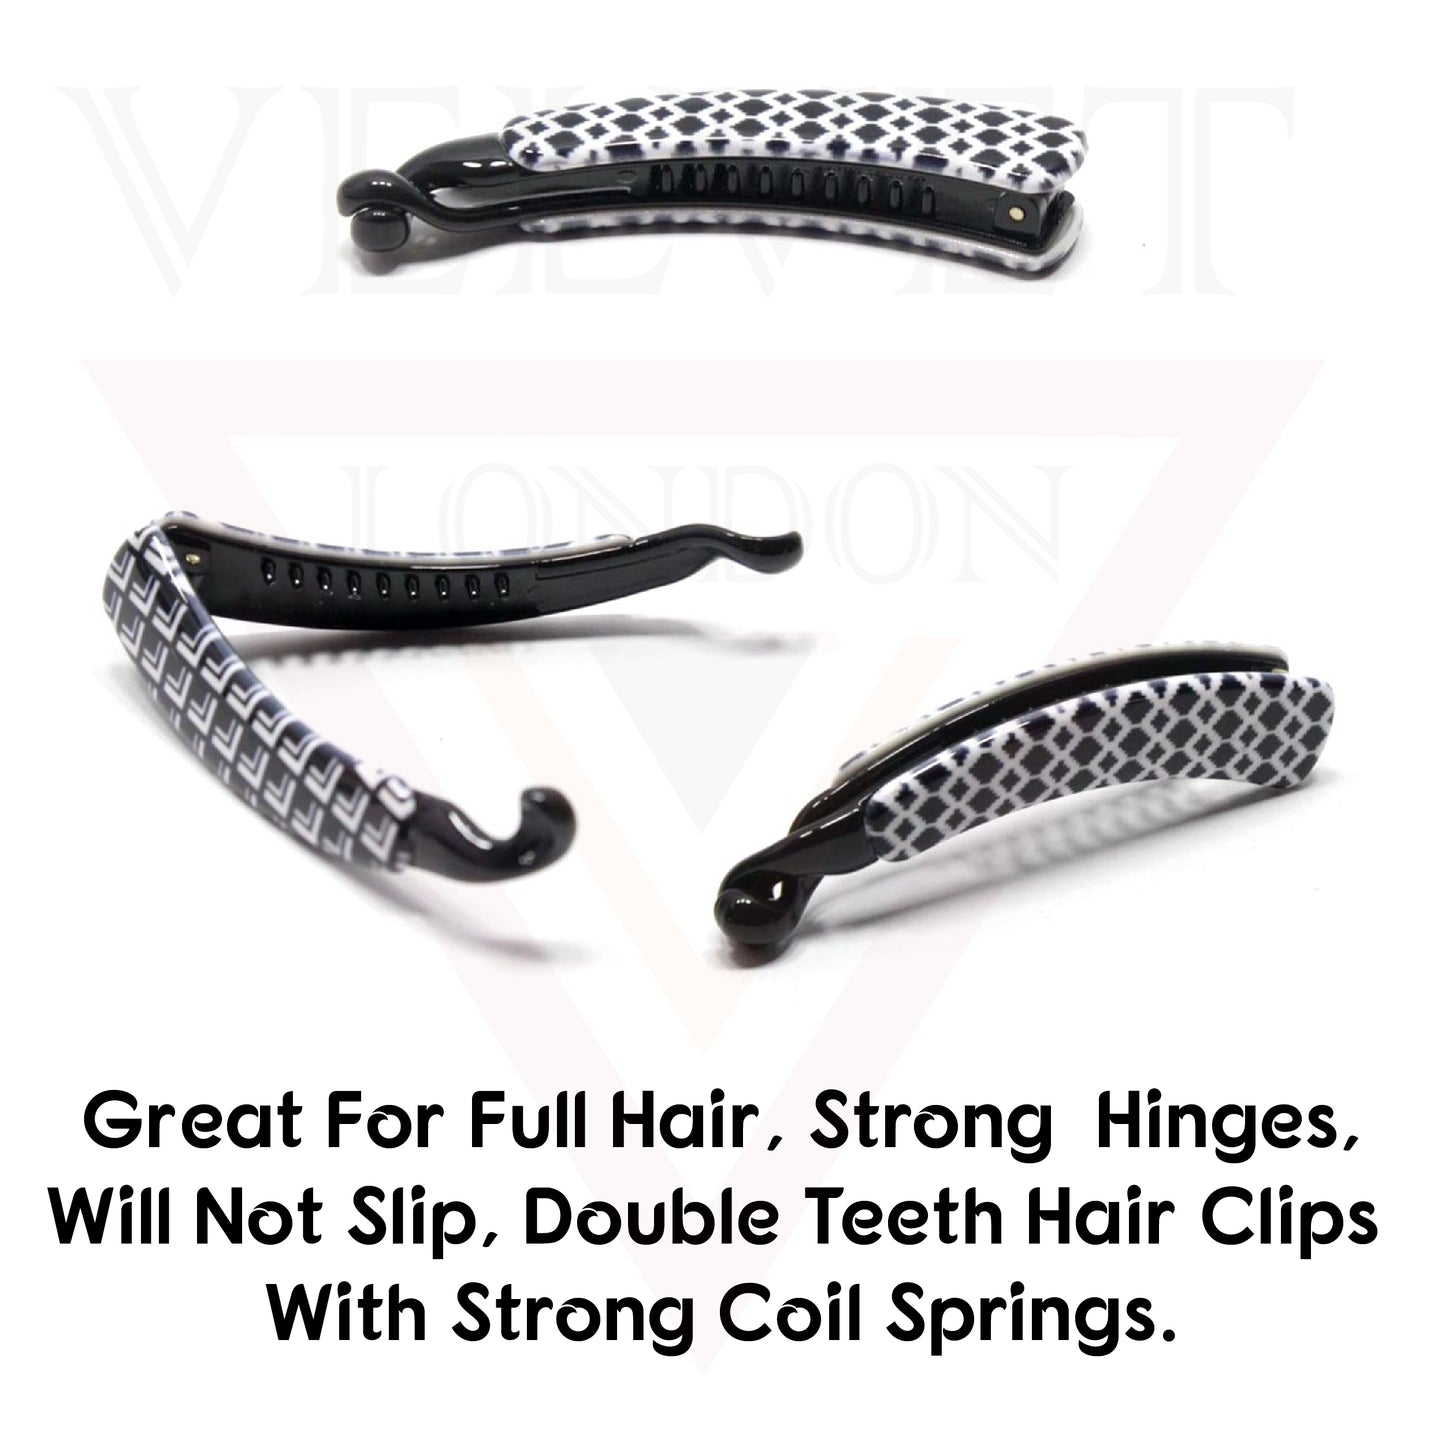 Banana Hair Clip Fishtail Comb Ponytail Holder Barley Clip